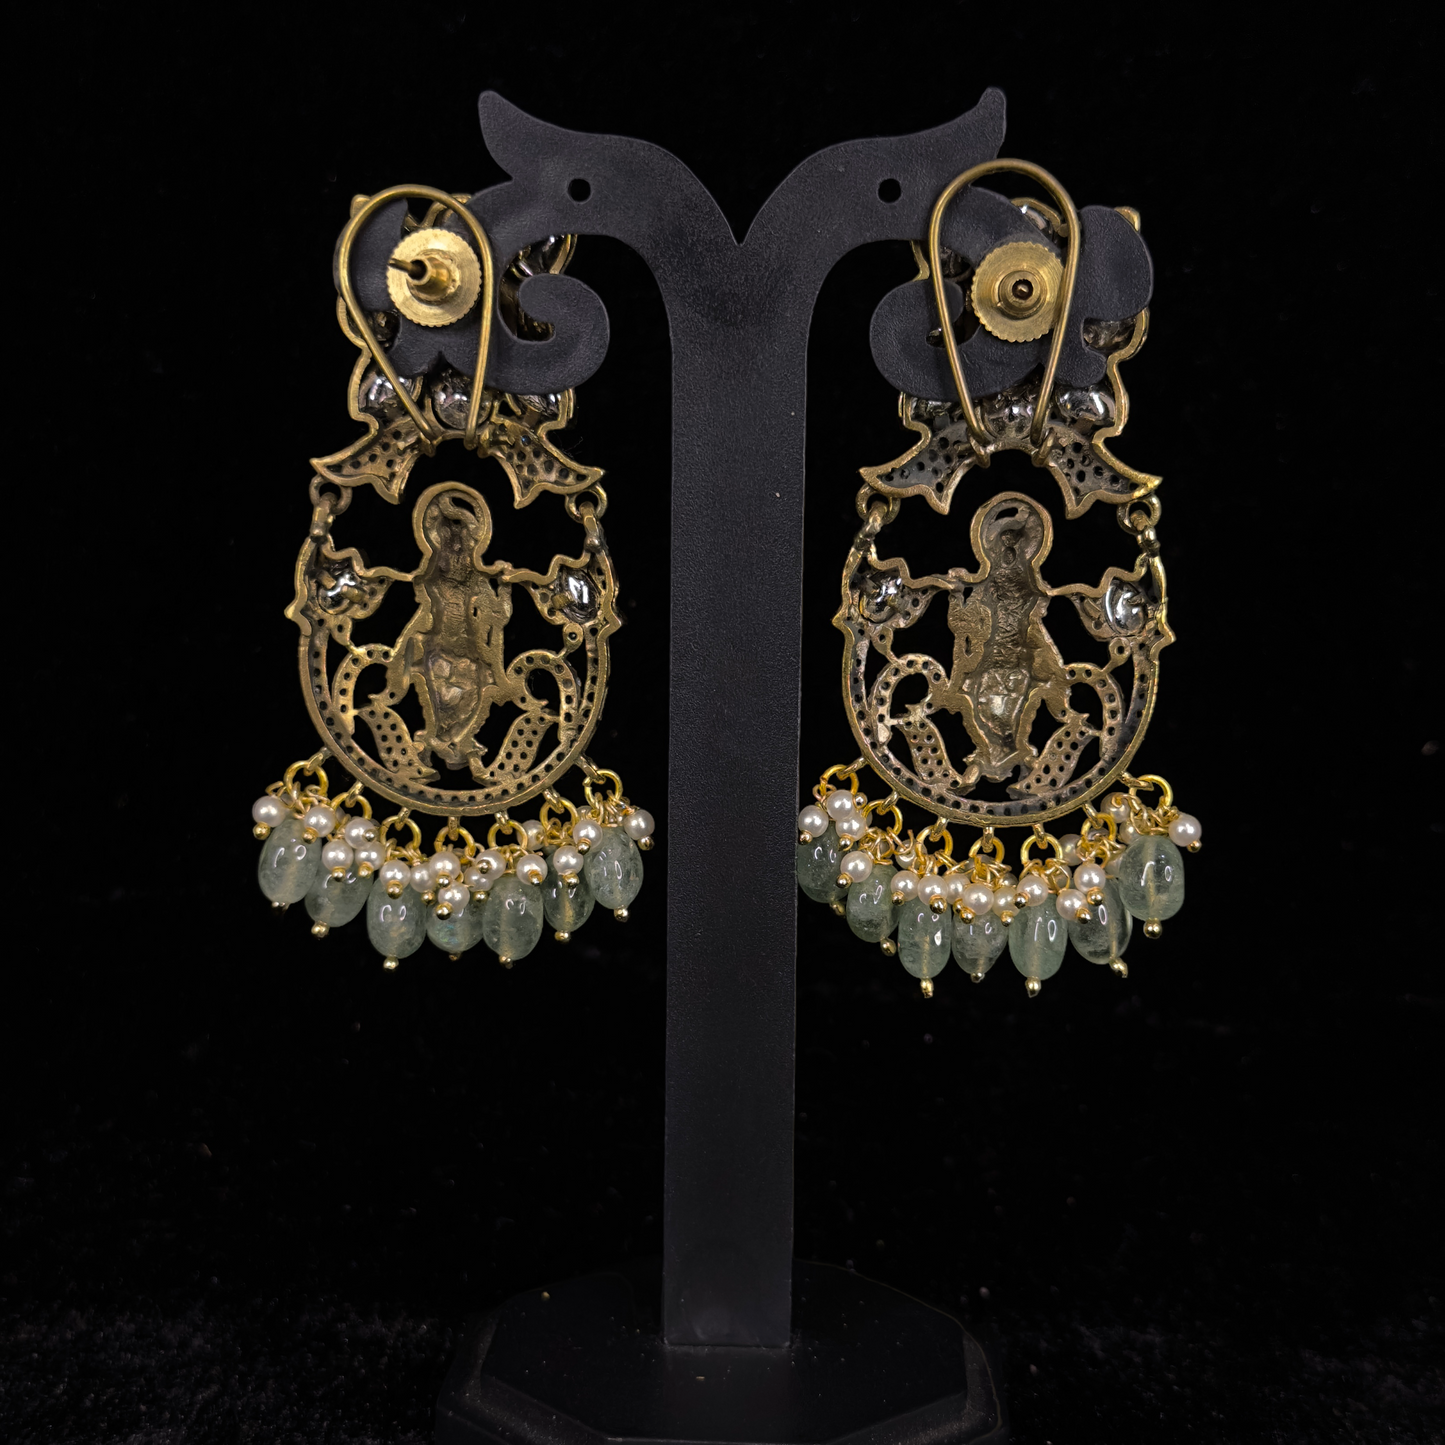 Lord Krishna Victorian Chandbali Earrings with beads